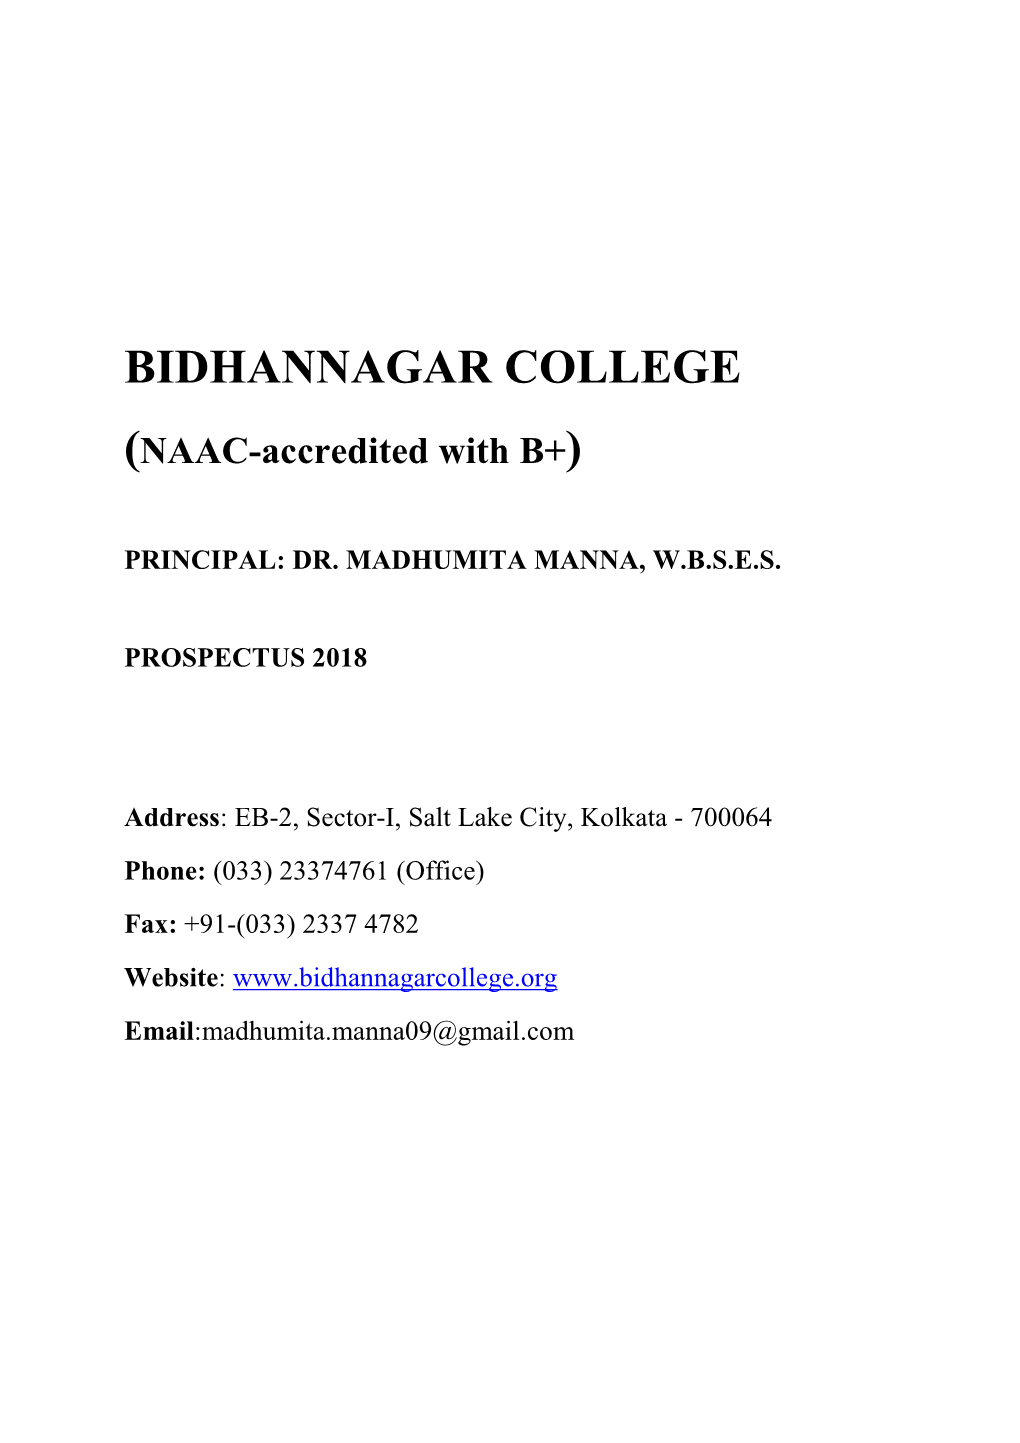 BIDHANNAGAR COLLEGE (NAAC-Accredited With